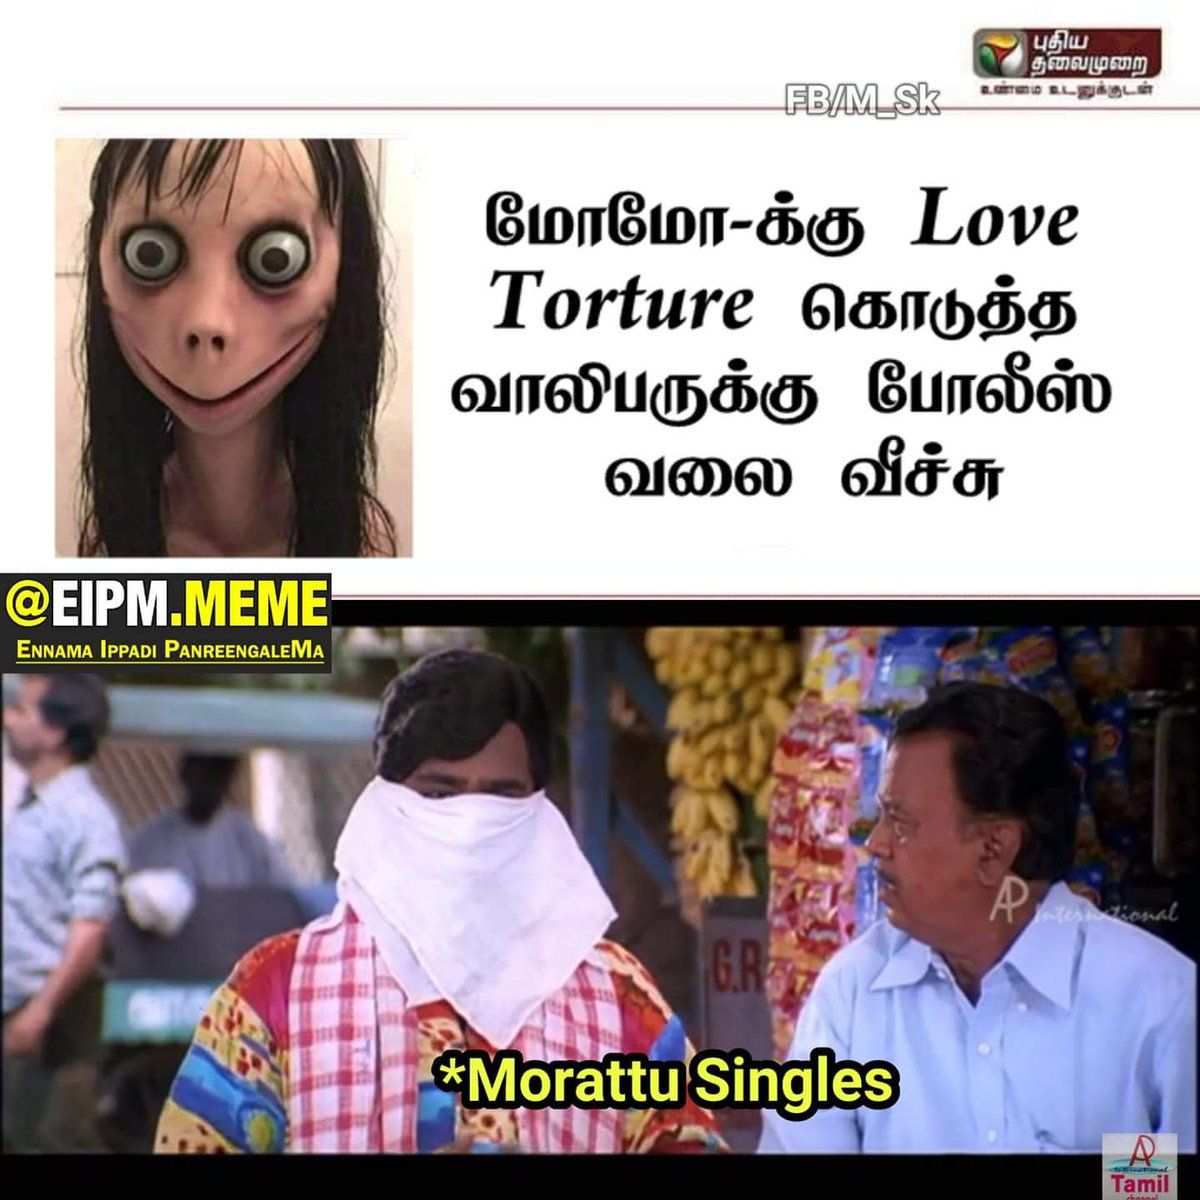 Momo gets roasted by meme creators! - Tamil News 